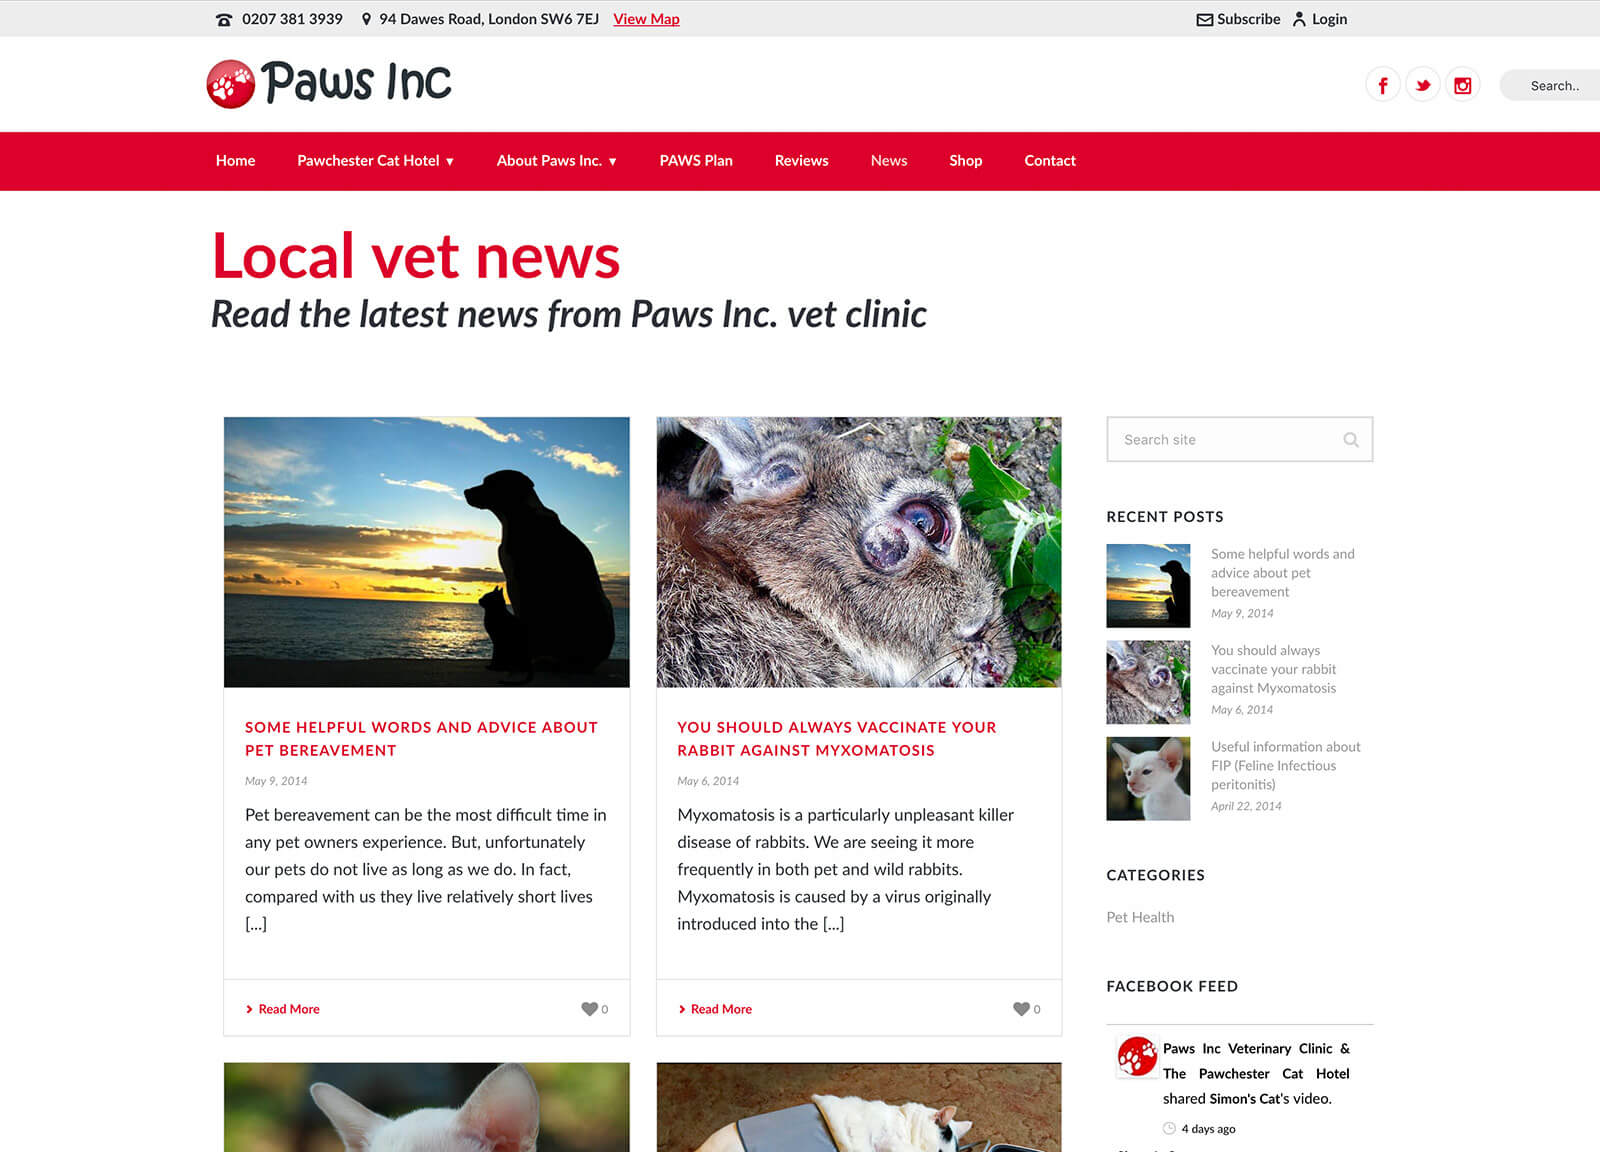 Cat hotel and vet practice website design - Vet news page